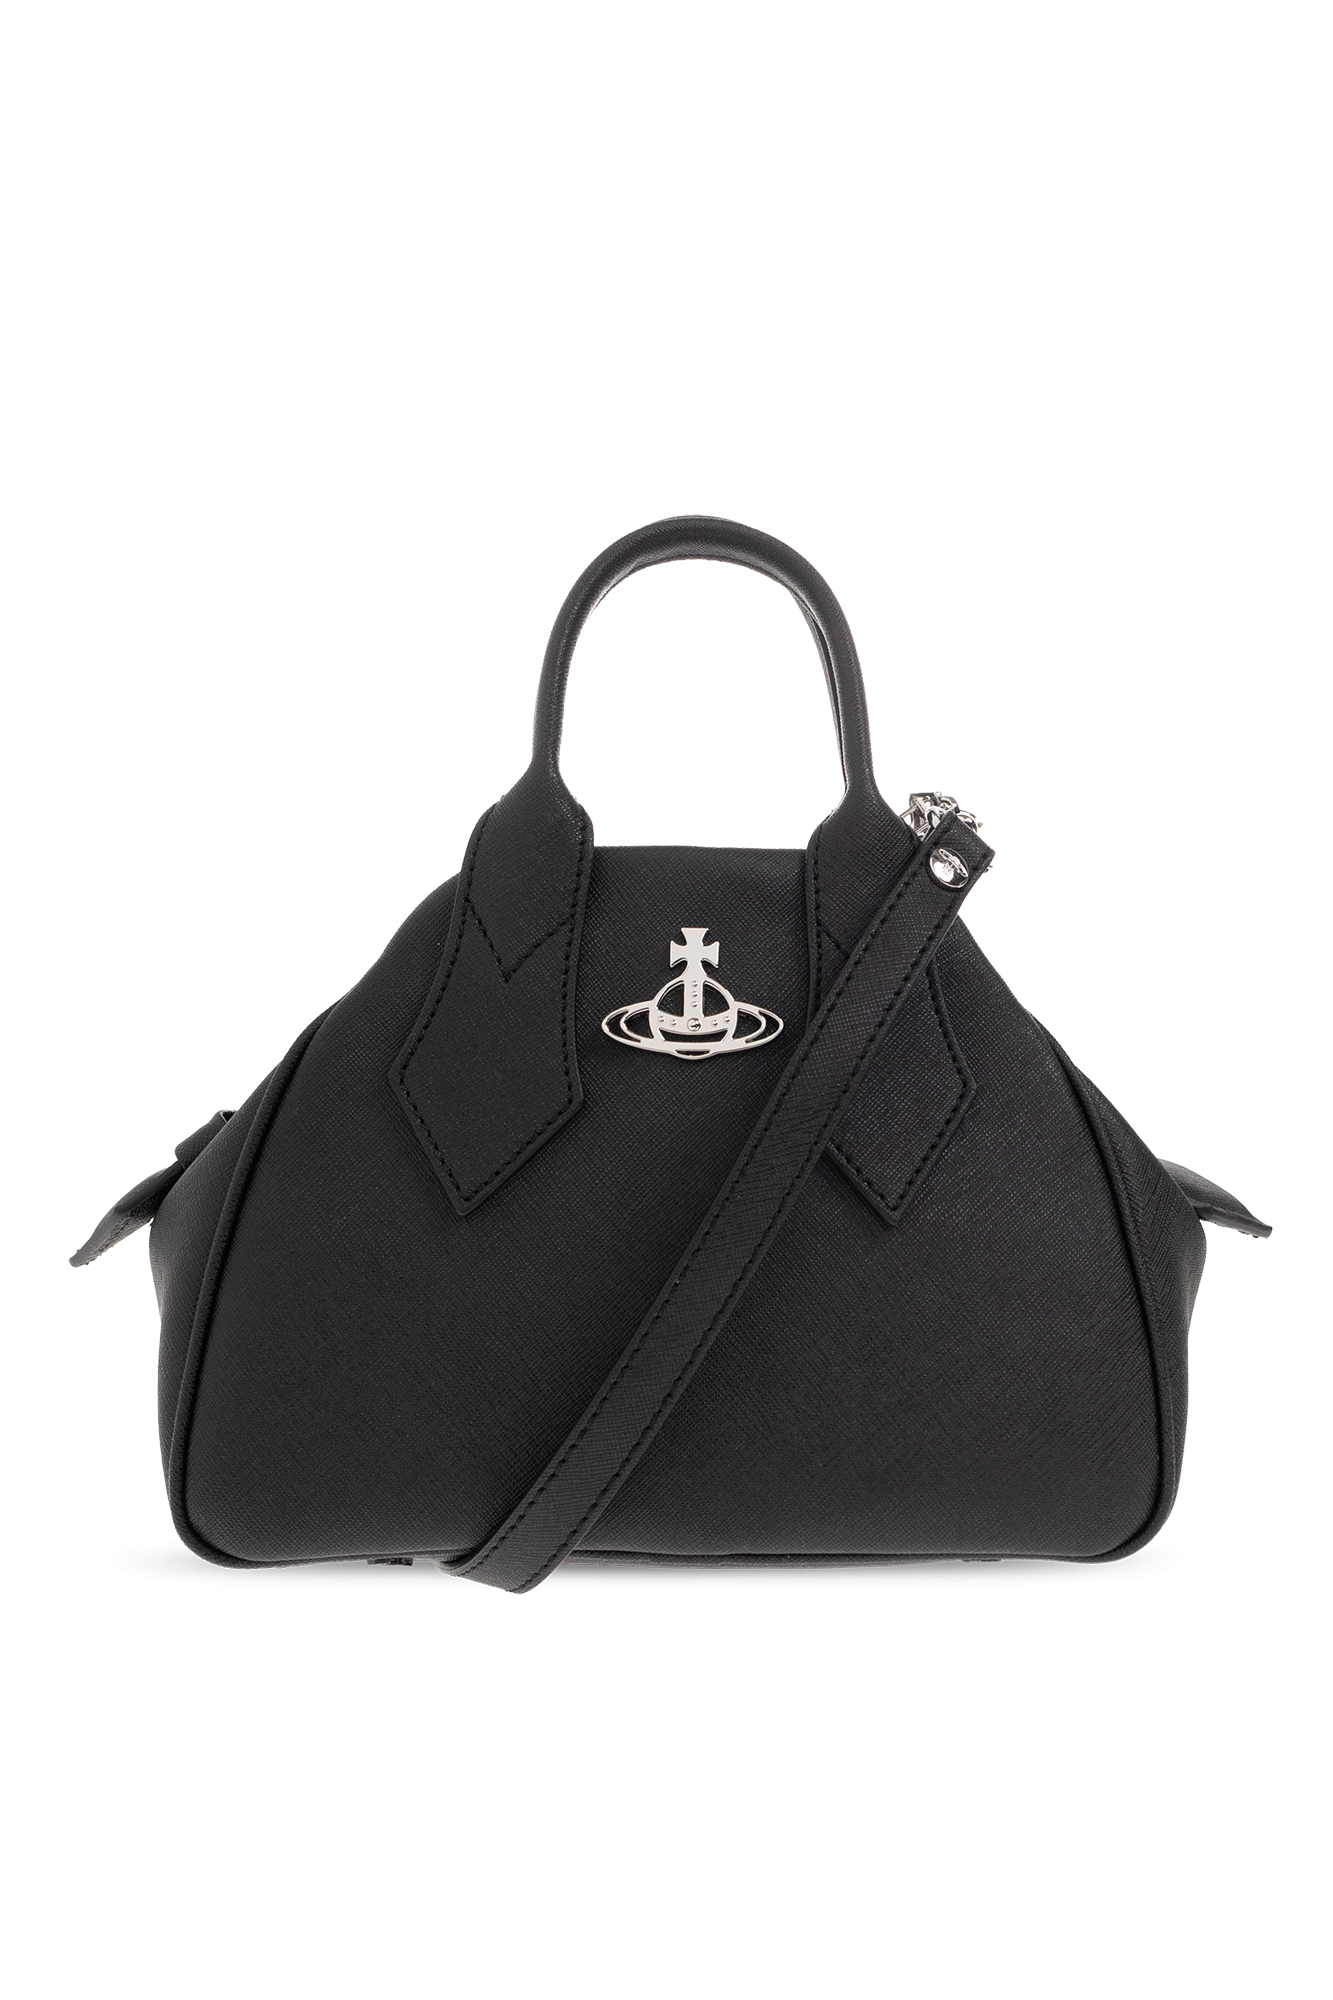 Vivienne Westwood ‘Yasmine Small’ shoulder bag